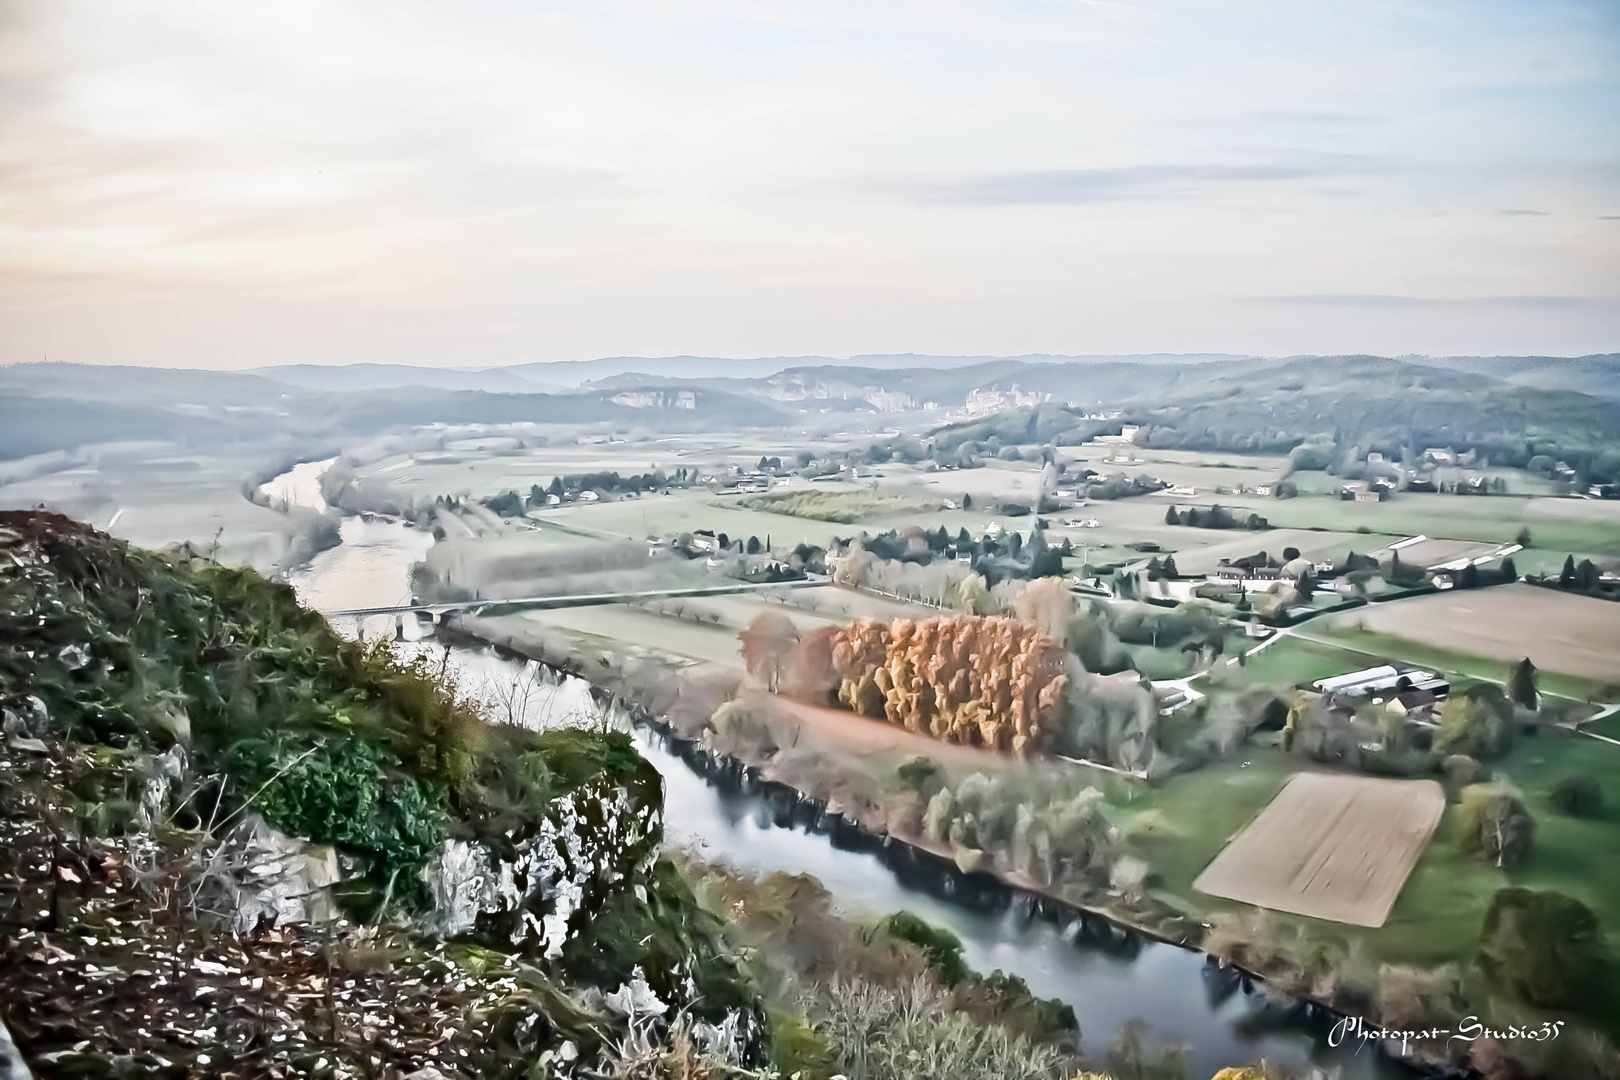 Dordogne domme